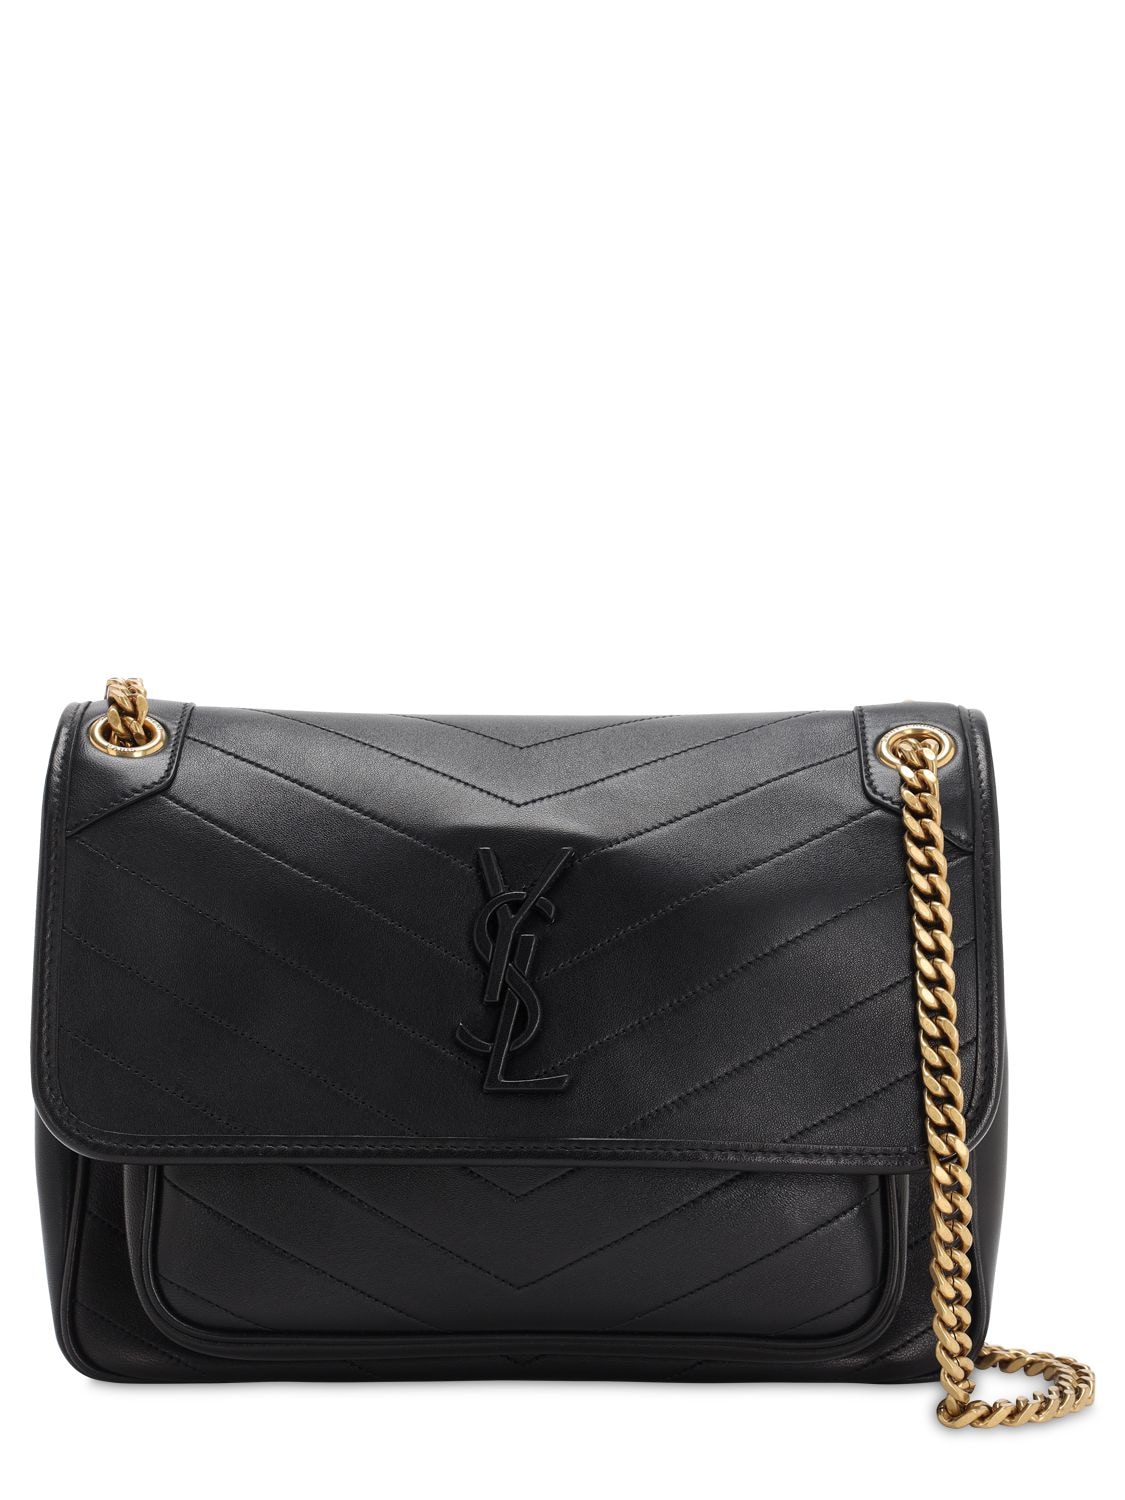 Saint Laurent Medium Niki Monogram Leather Bag In Black